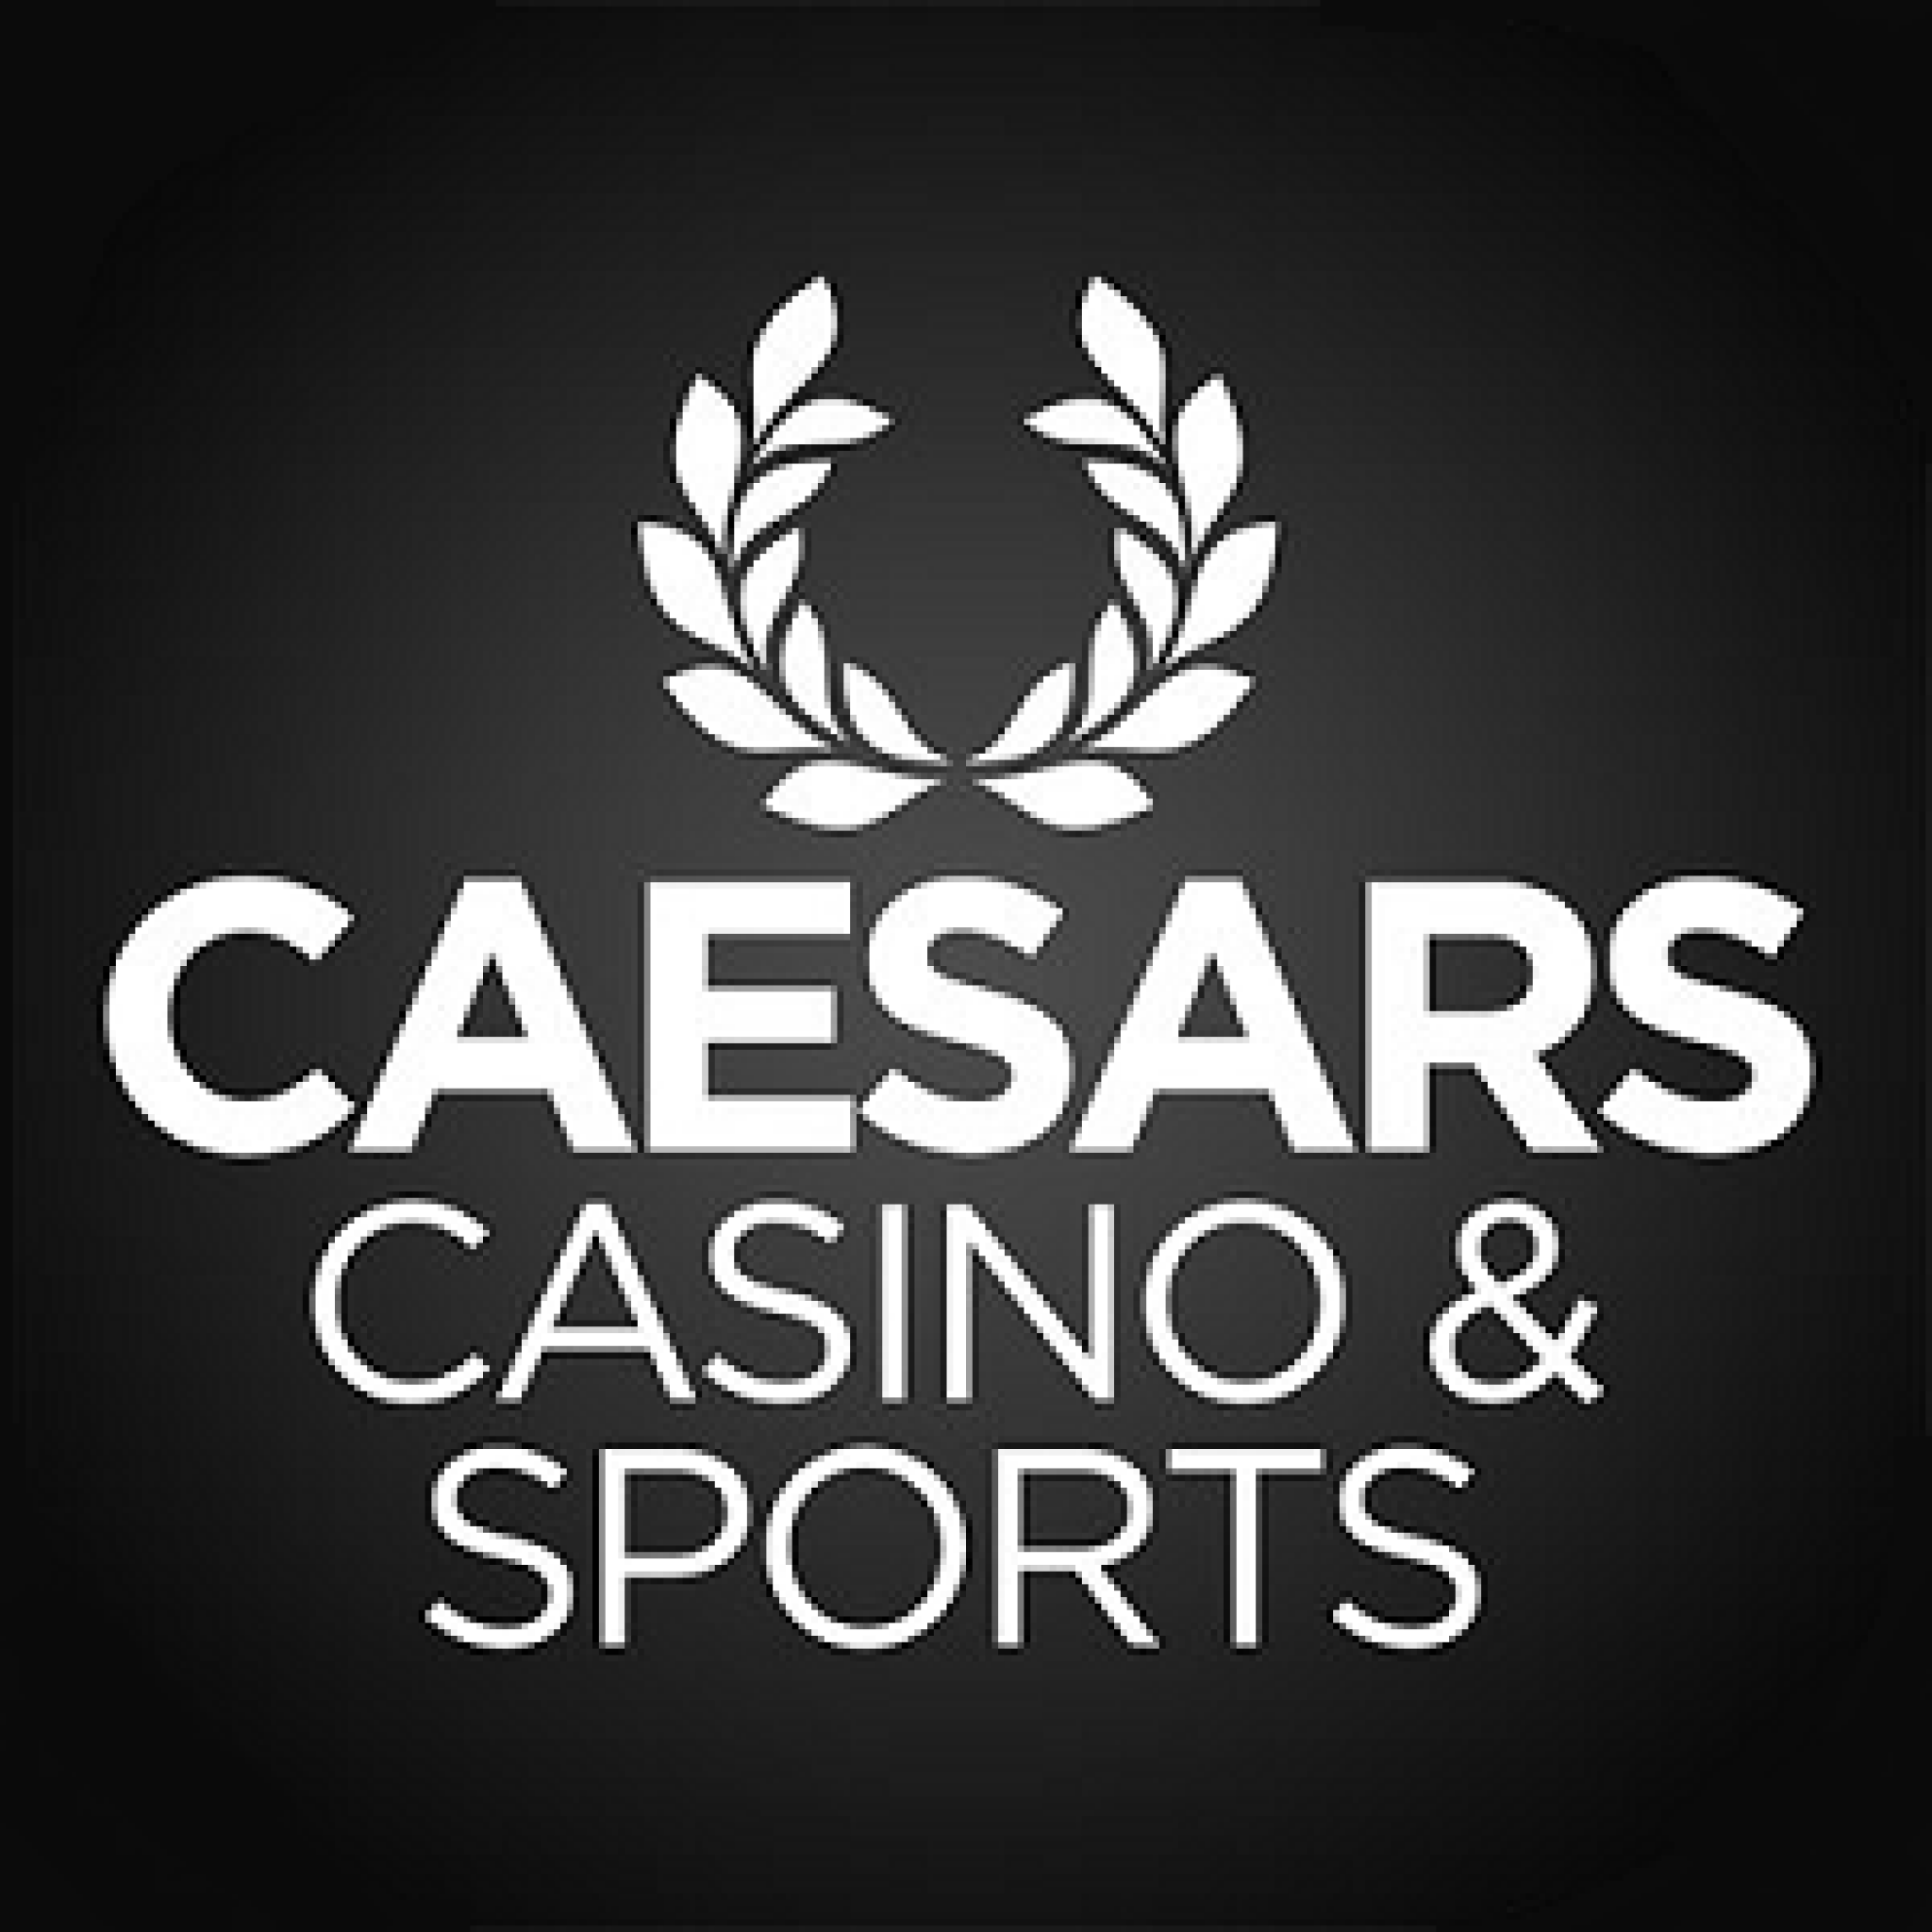 Caesars Casino downloading